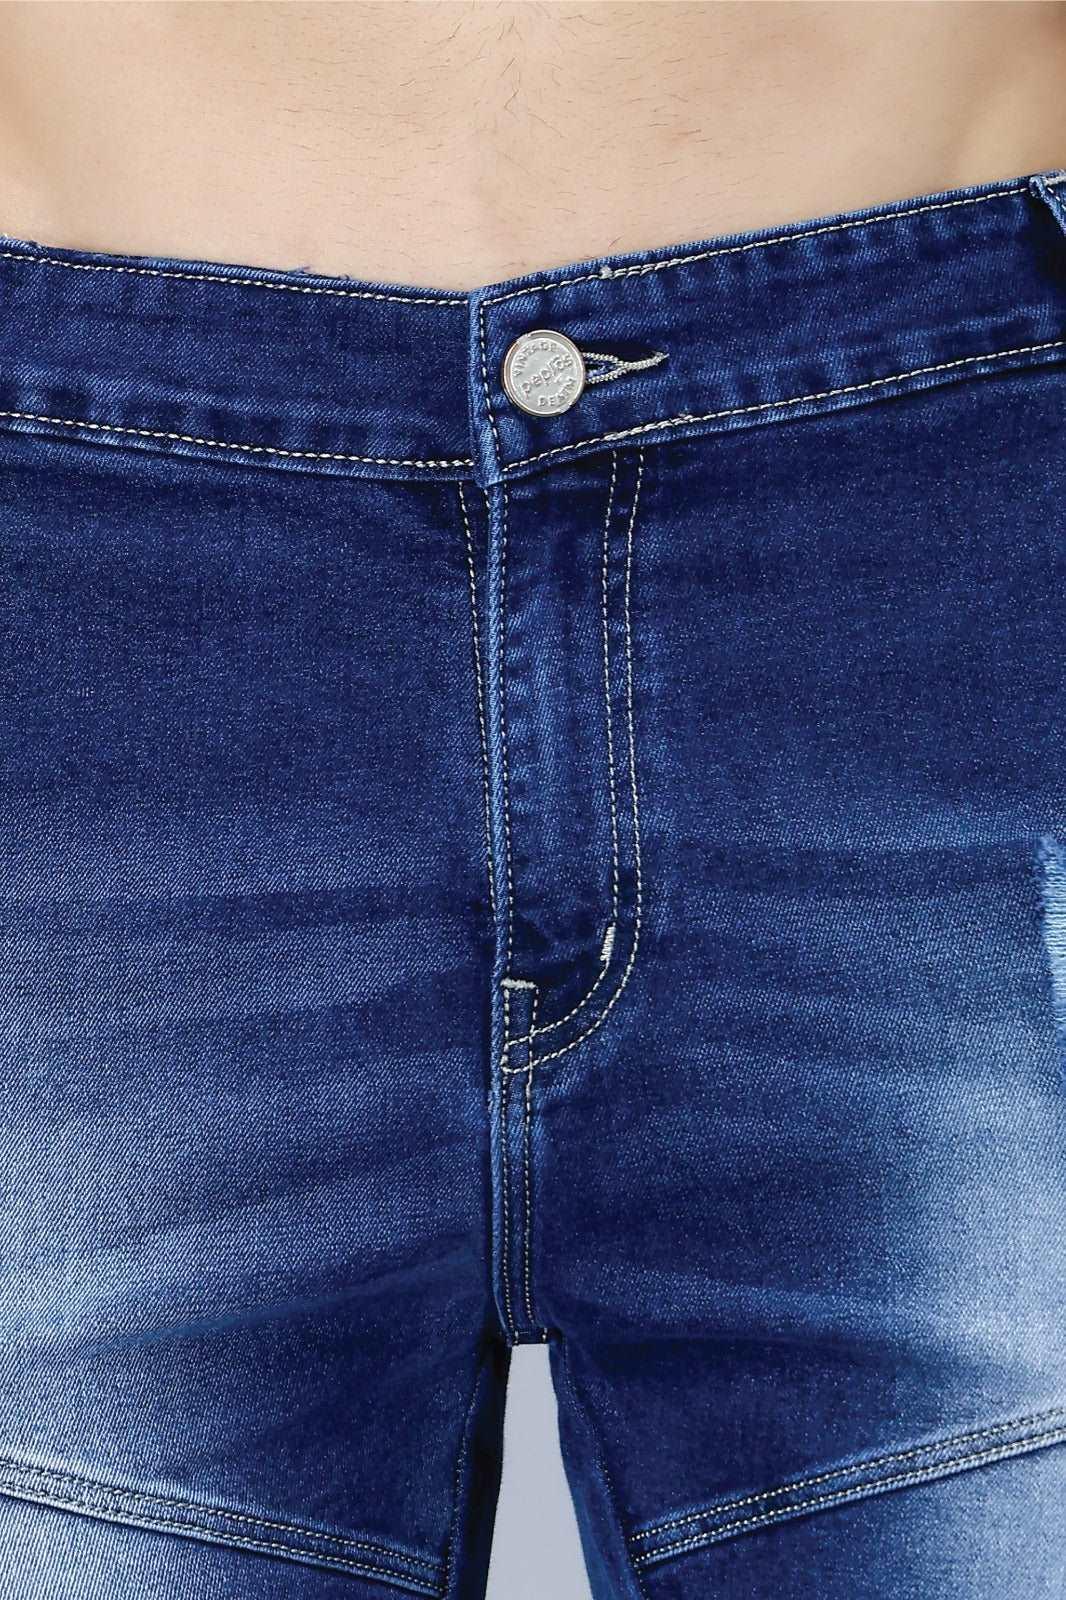 A2Z 4 Kids Jeans Lightweight Denim Ripped Skinny Stretch Comfort Jeans Pants  | eBay